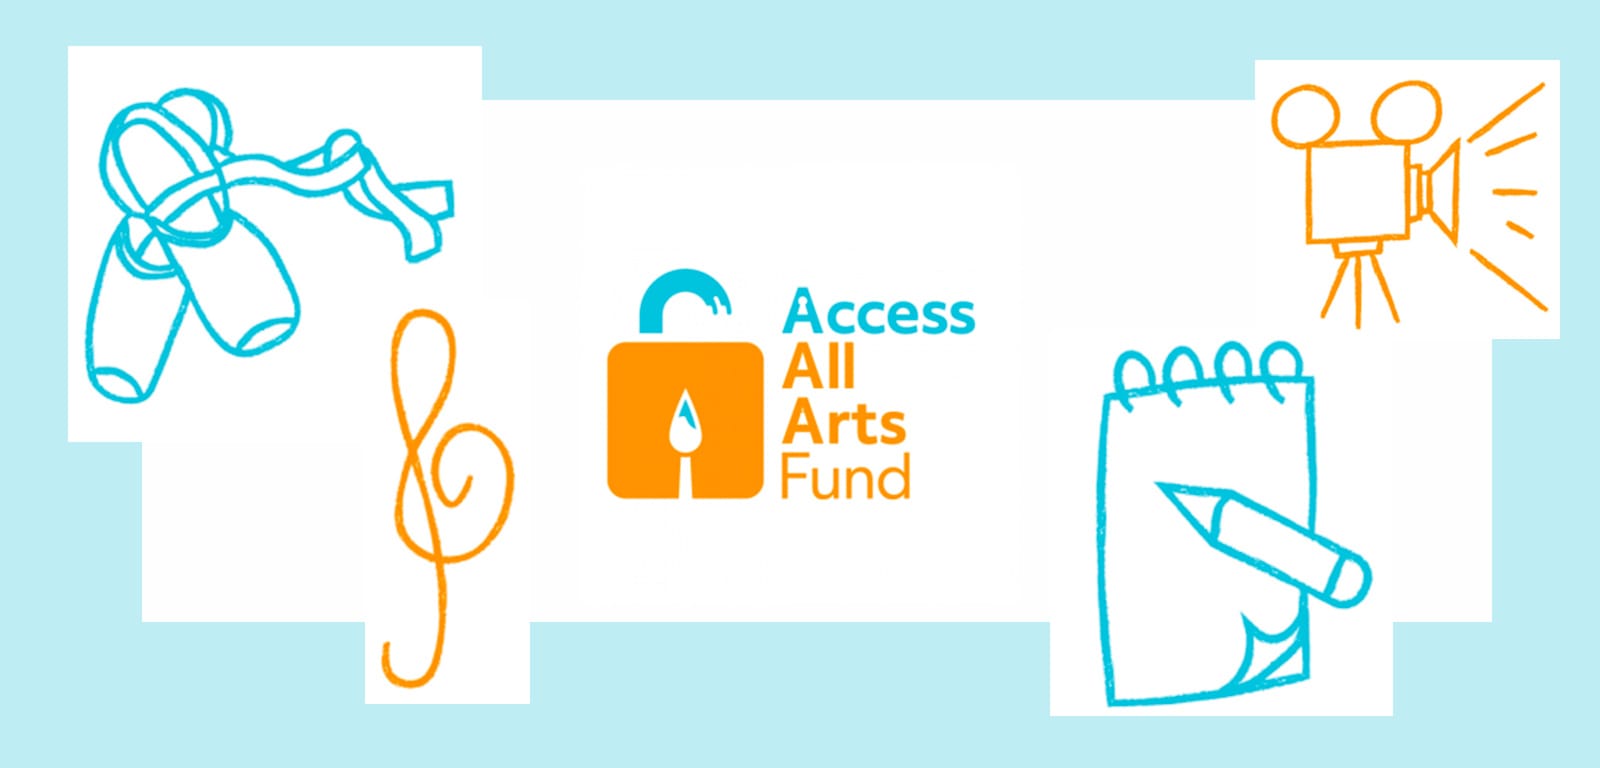 Access all arts fund logo